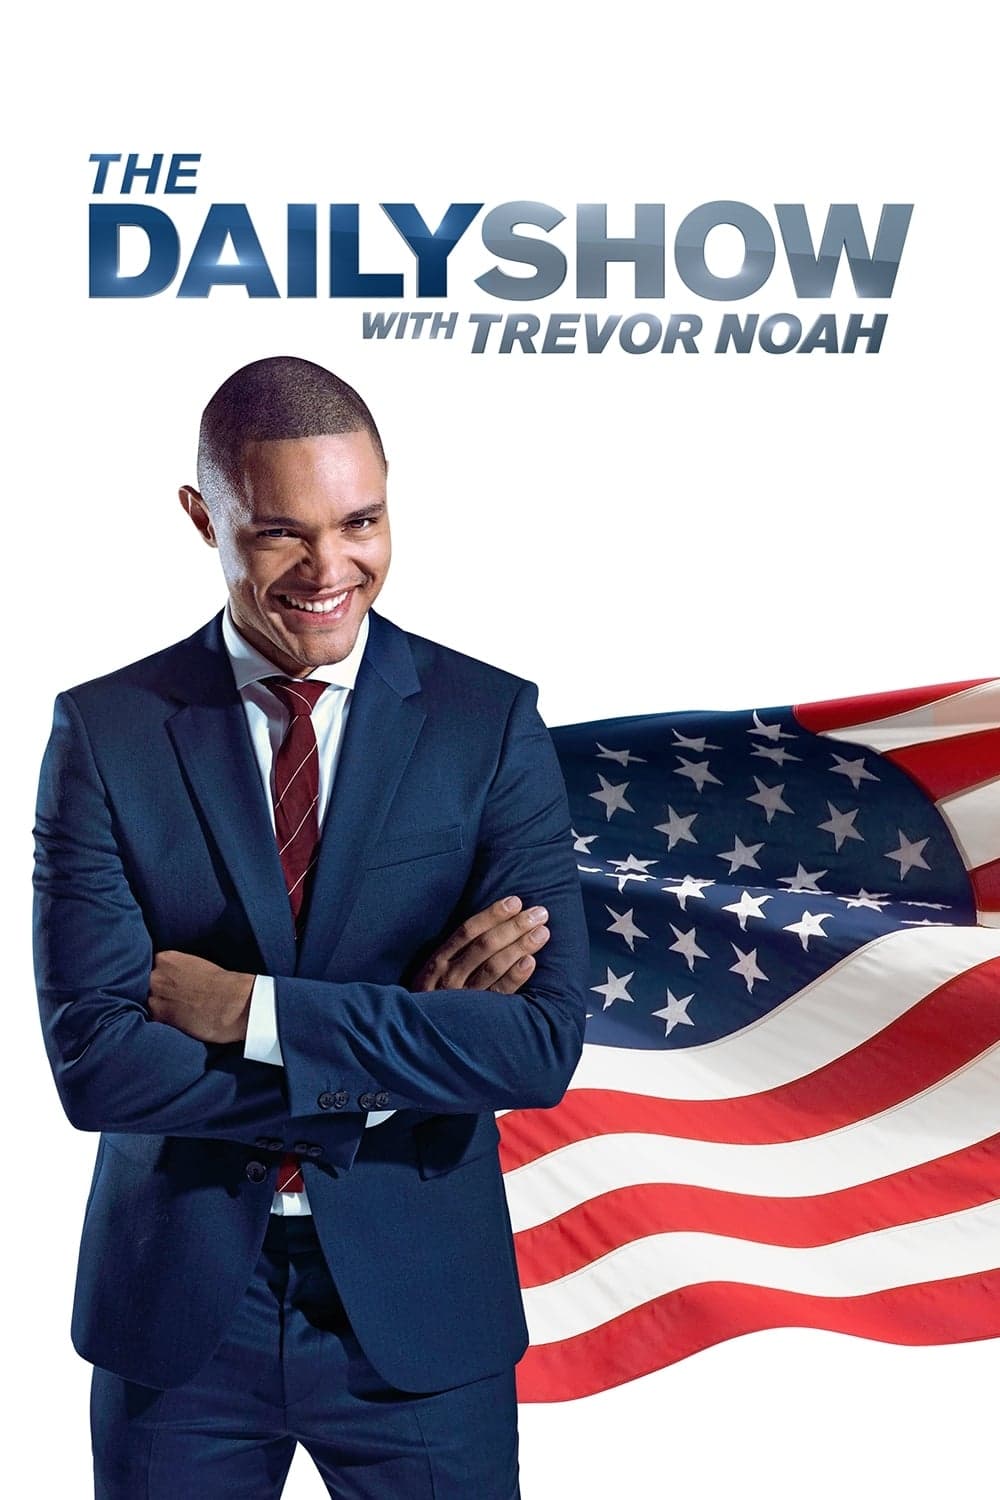 The Daily Show Season 22